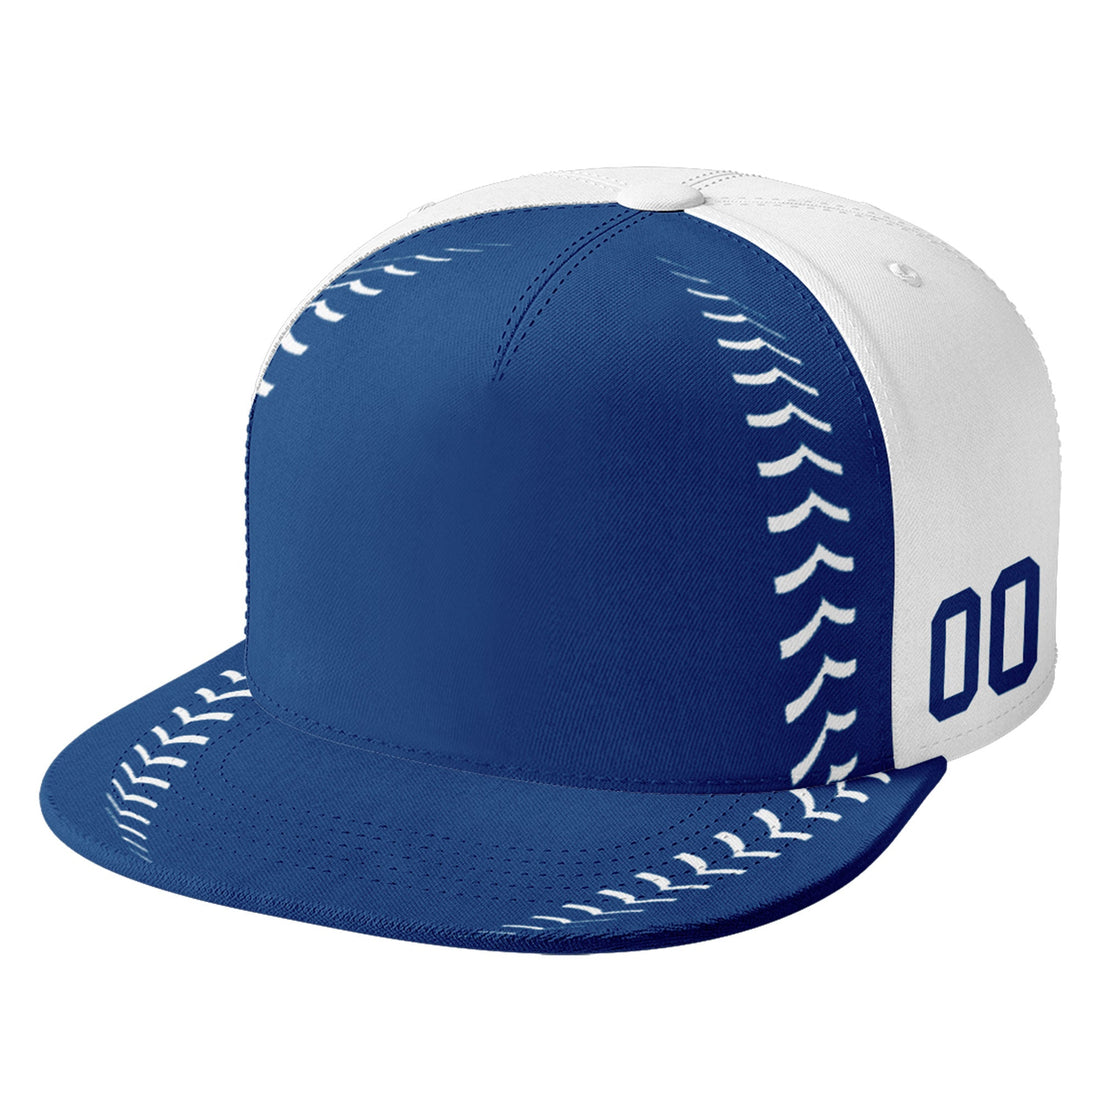 Custom Sport Design Hat Stitched Adjustable Snapback Personalized Baseball Cap PR067B-bd0b00d9-ab